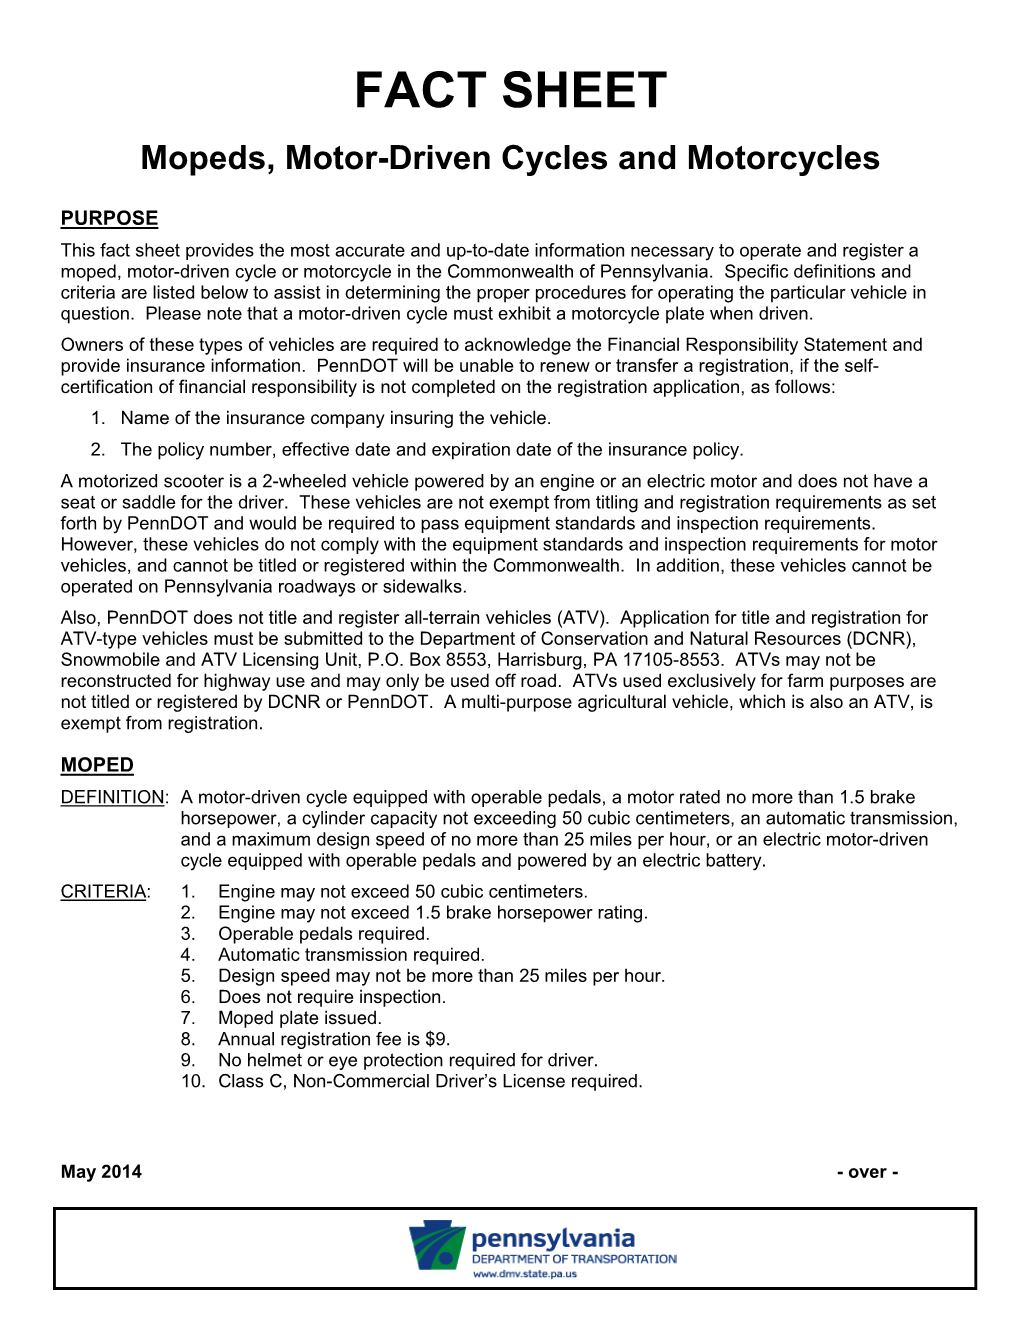 Mopeds, Motor-Driven Cycles and Motorcycles Fact Sheet